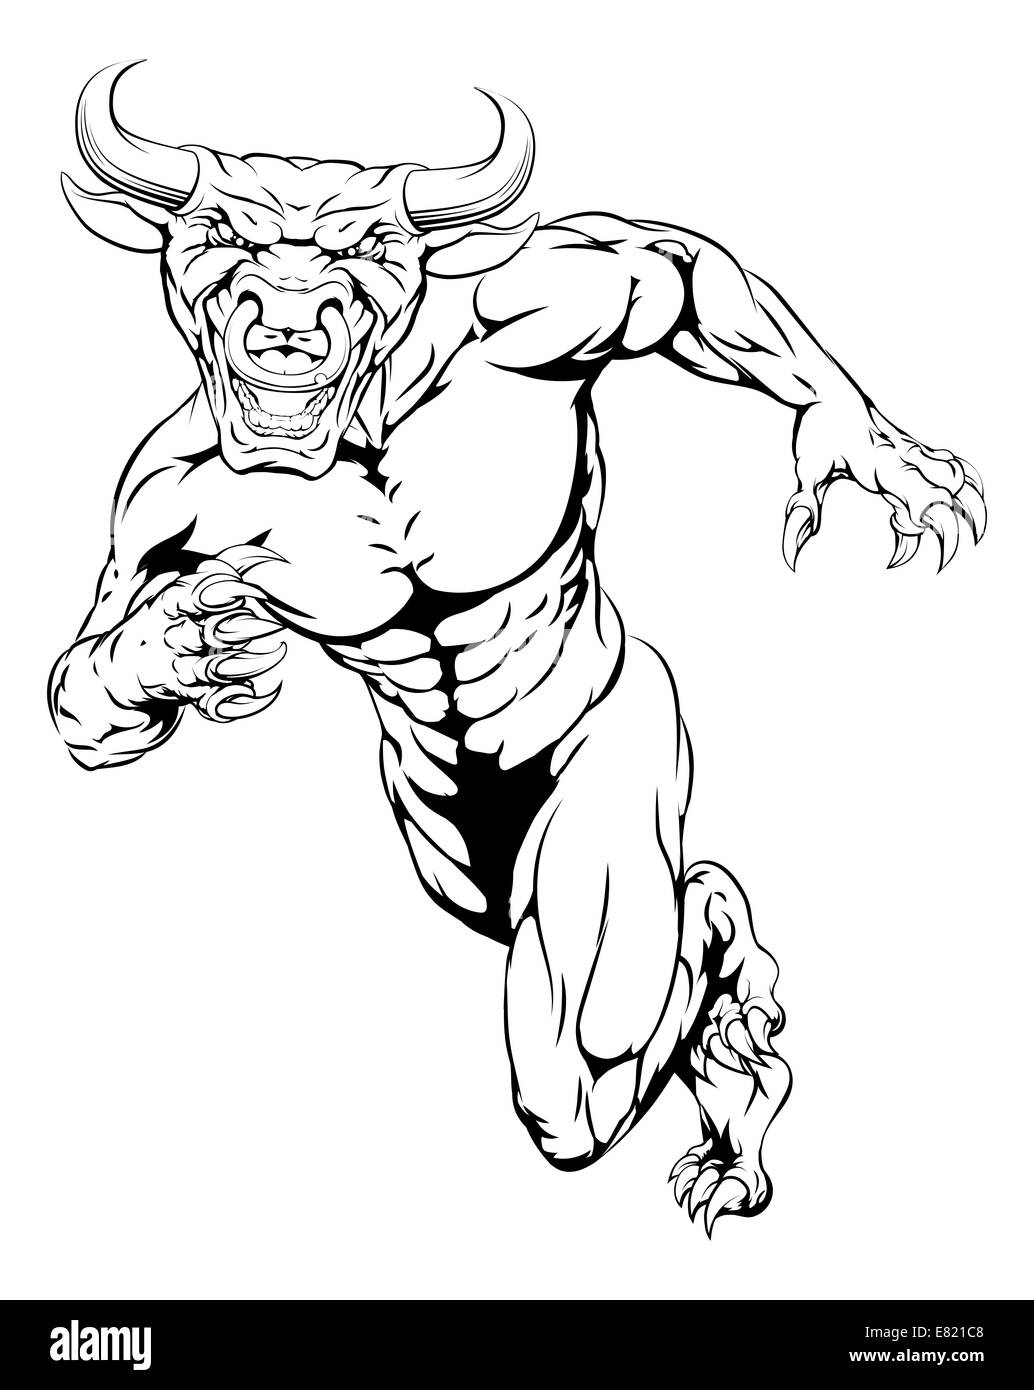 Charging Bull mascot illustration of a bull animal sports mascot or character sprinting Stock Photo